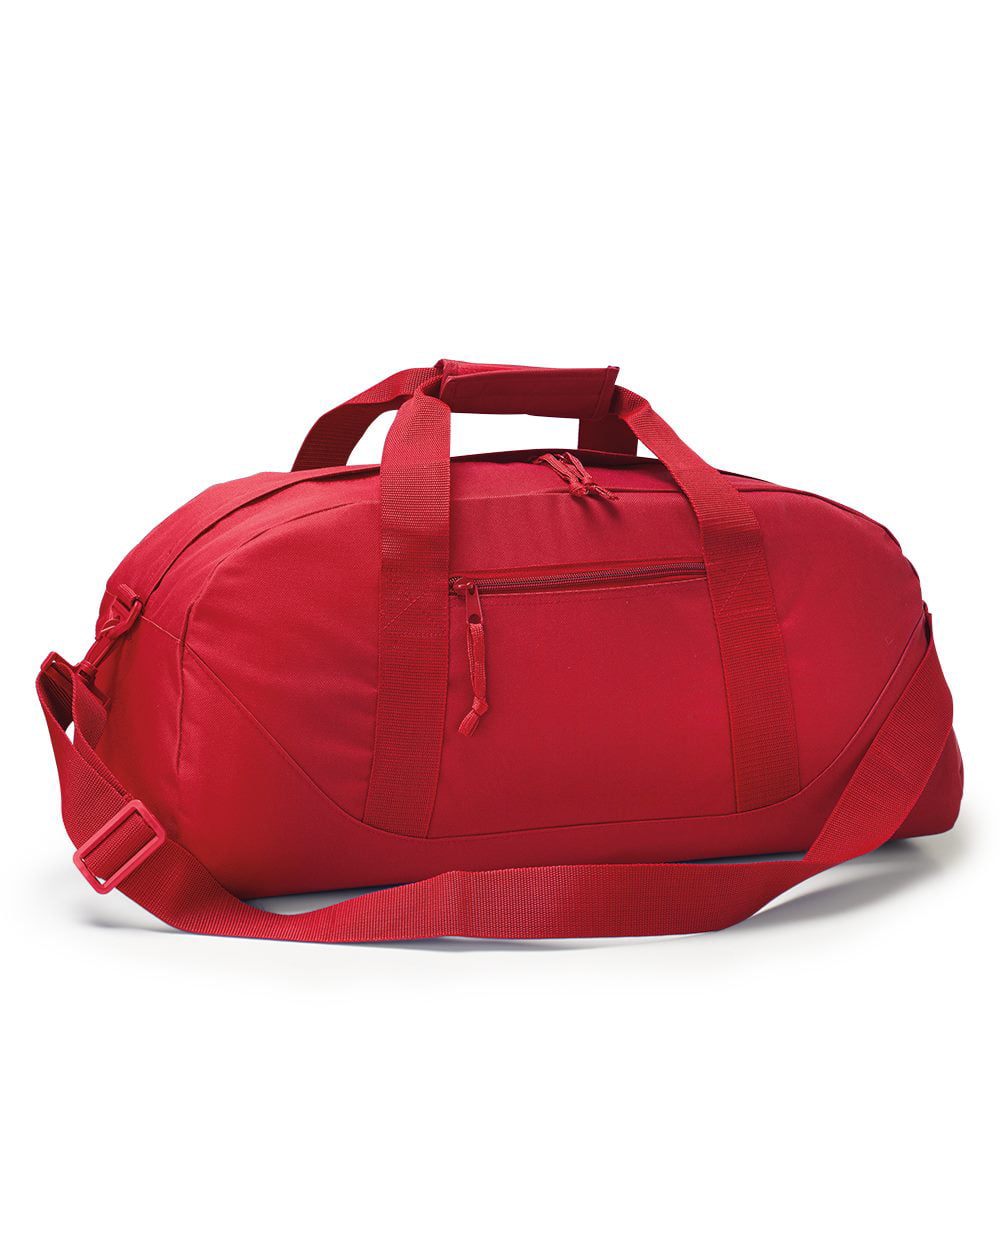 Duffel Waterproof Bag Black Large Size: 501833 Travel Duffel Bag for Men and Women Large-Capacity Travel Bag Female Hand Bag ZHICHUANG Fitness Bag